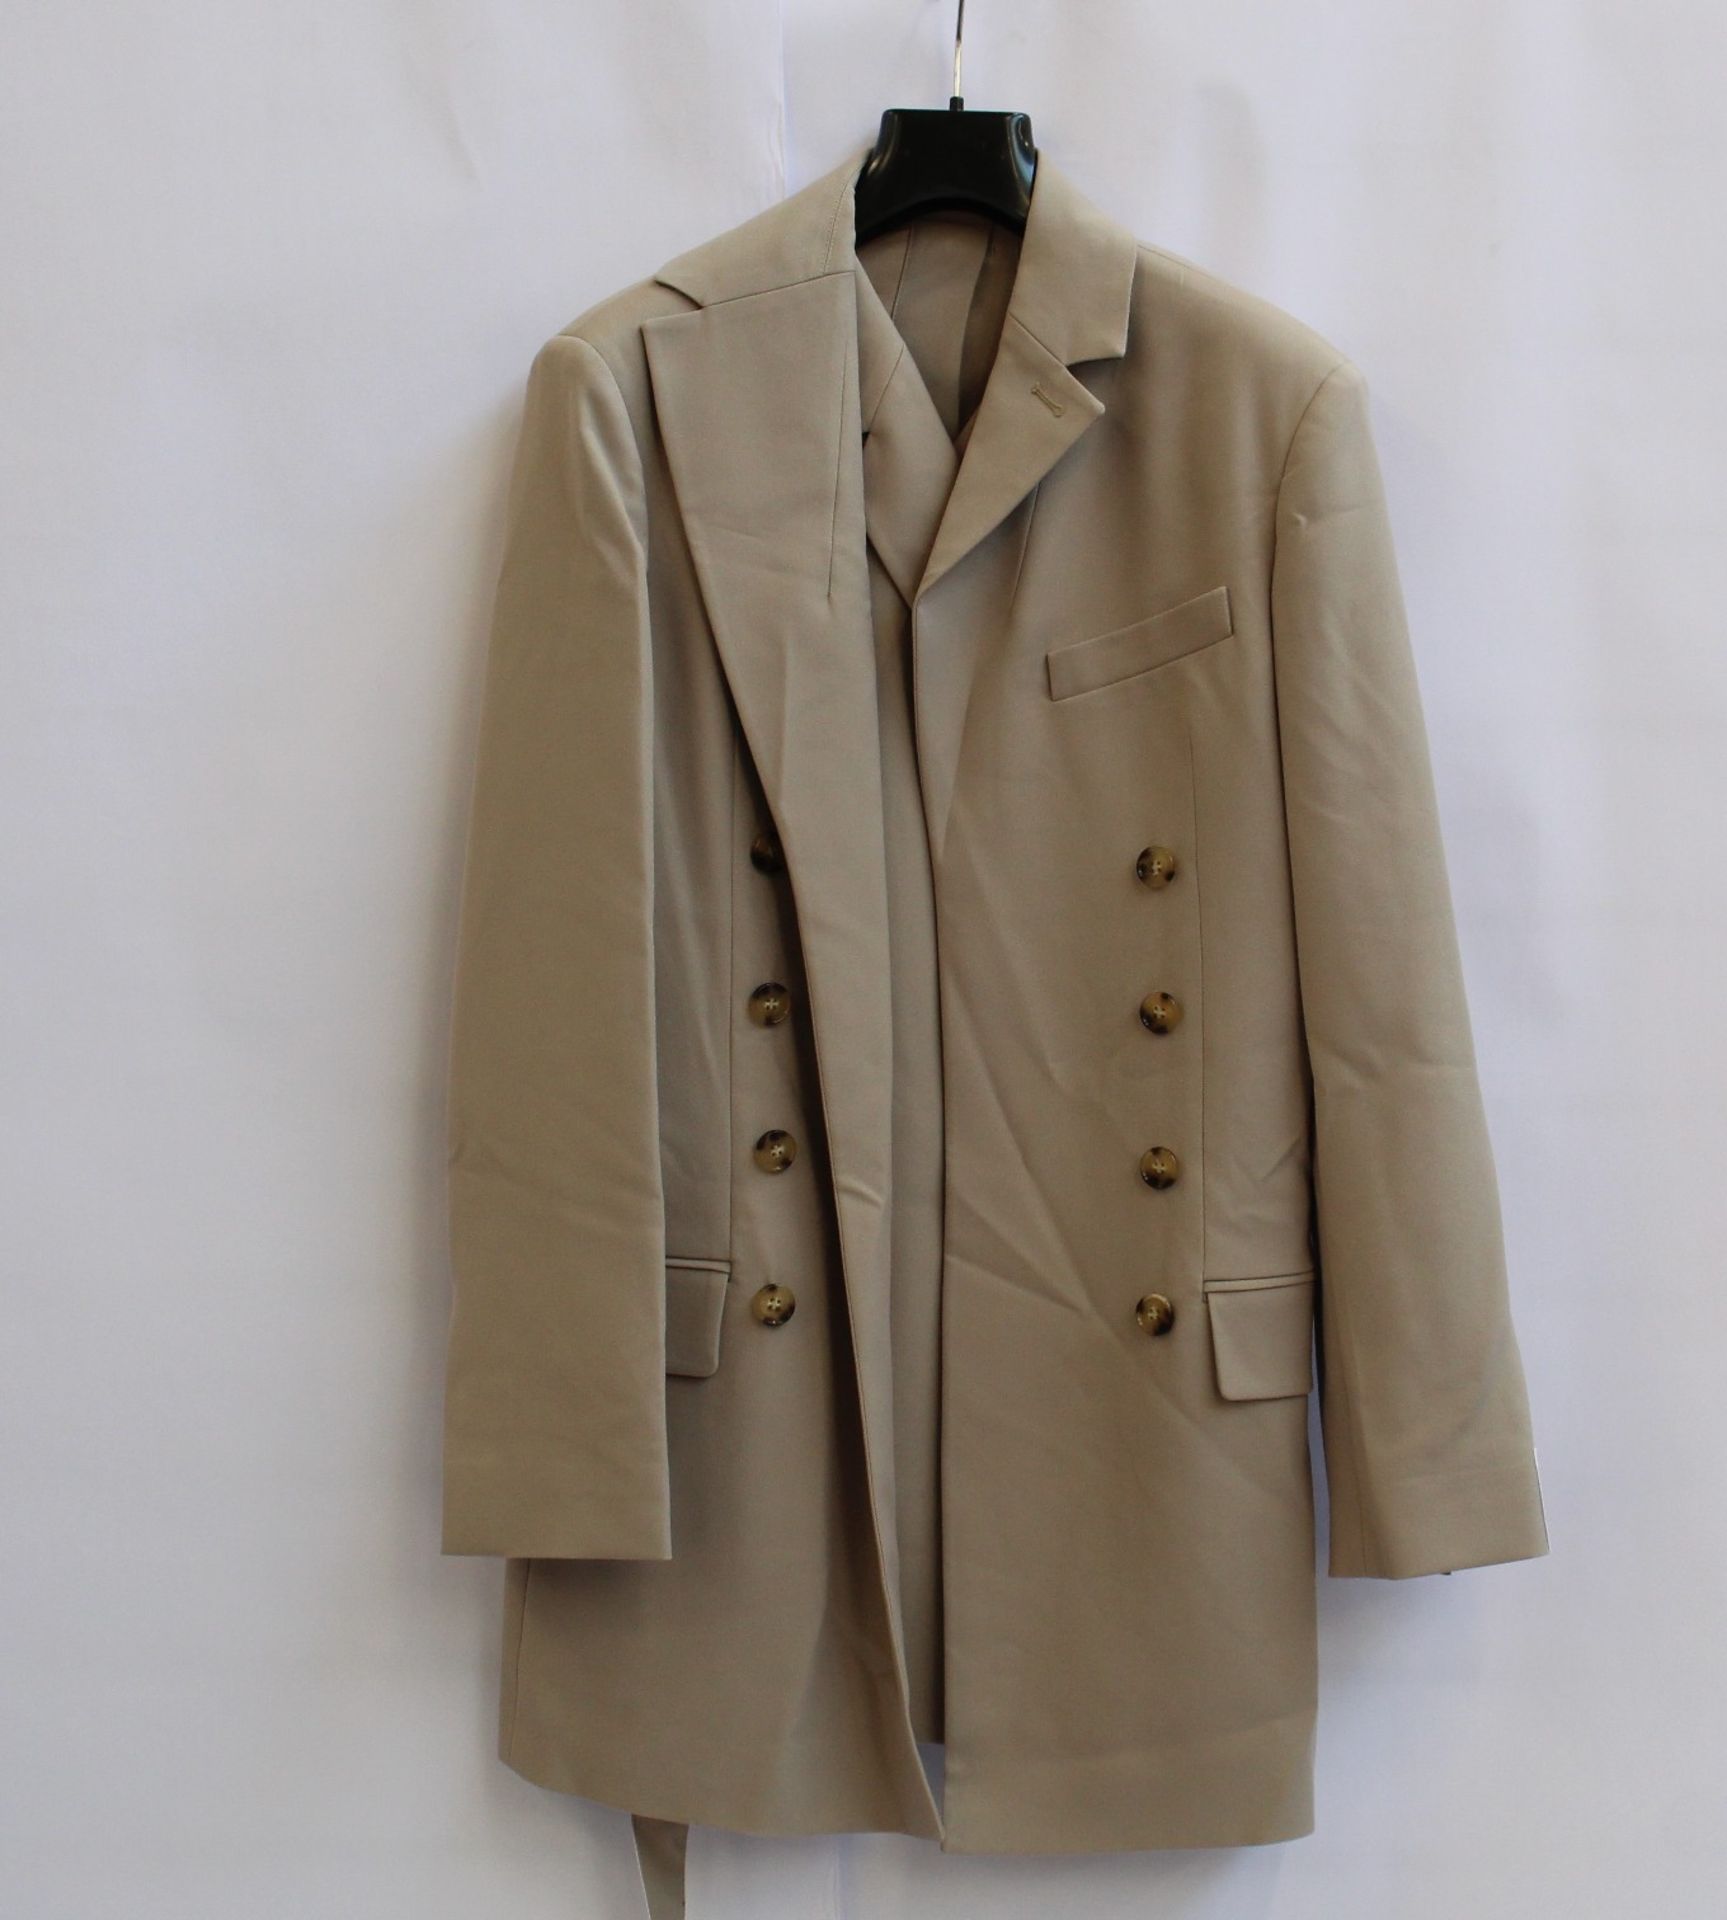 An as new Rokh Pour Femme Pret a Porter double belt jacket in beige (Size 36 - RRP £548).